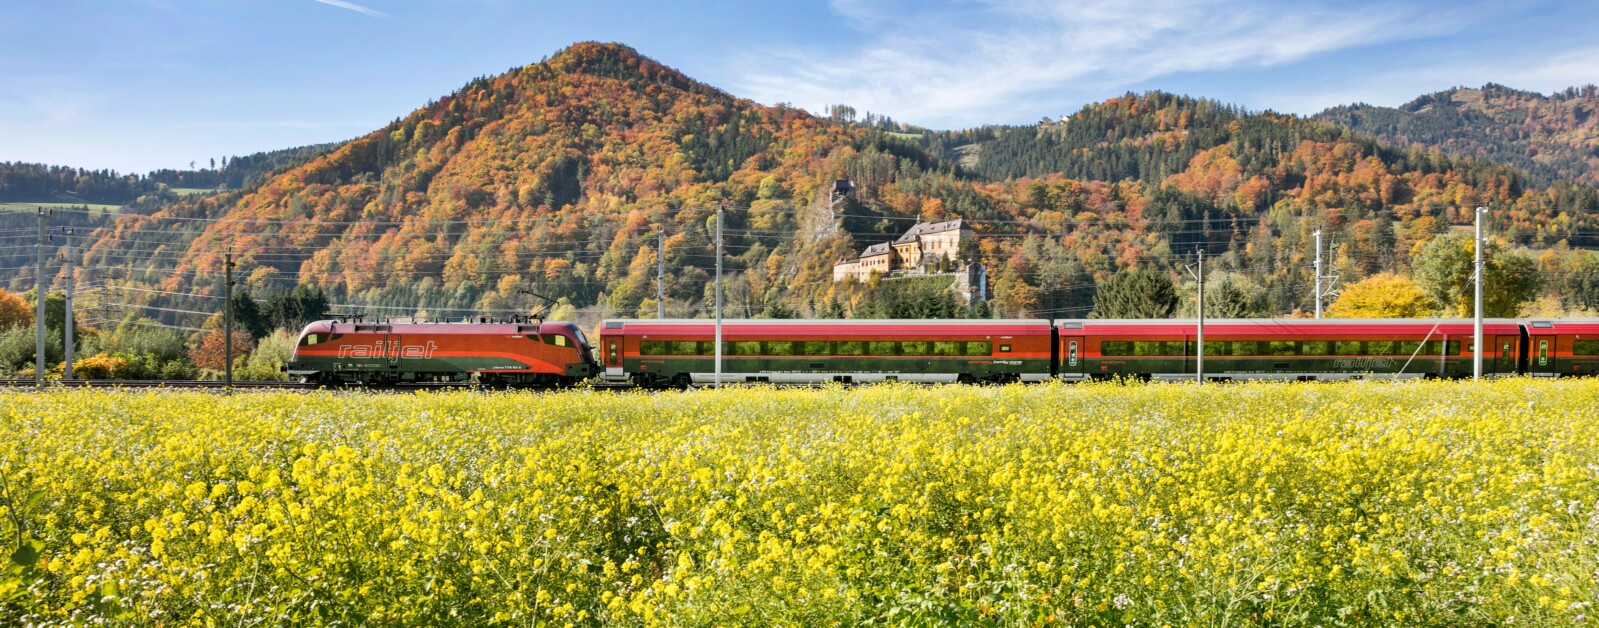 Ö62 ** Austria-ferrocarril locomotora ajax ** sin usar 